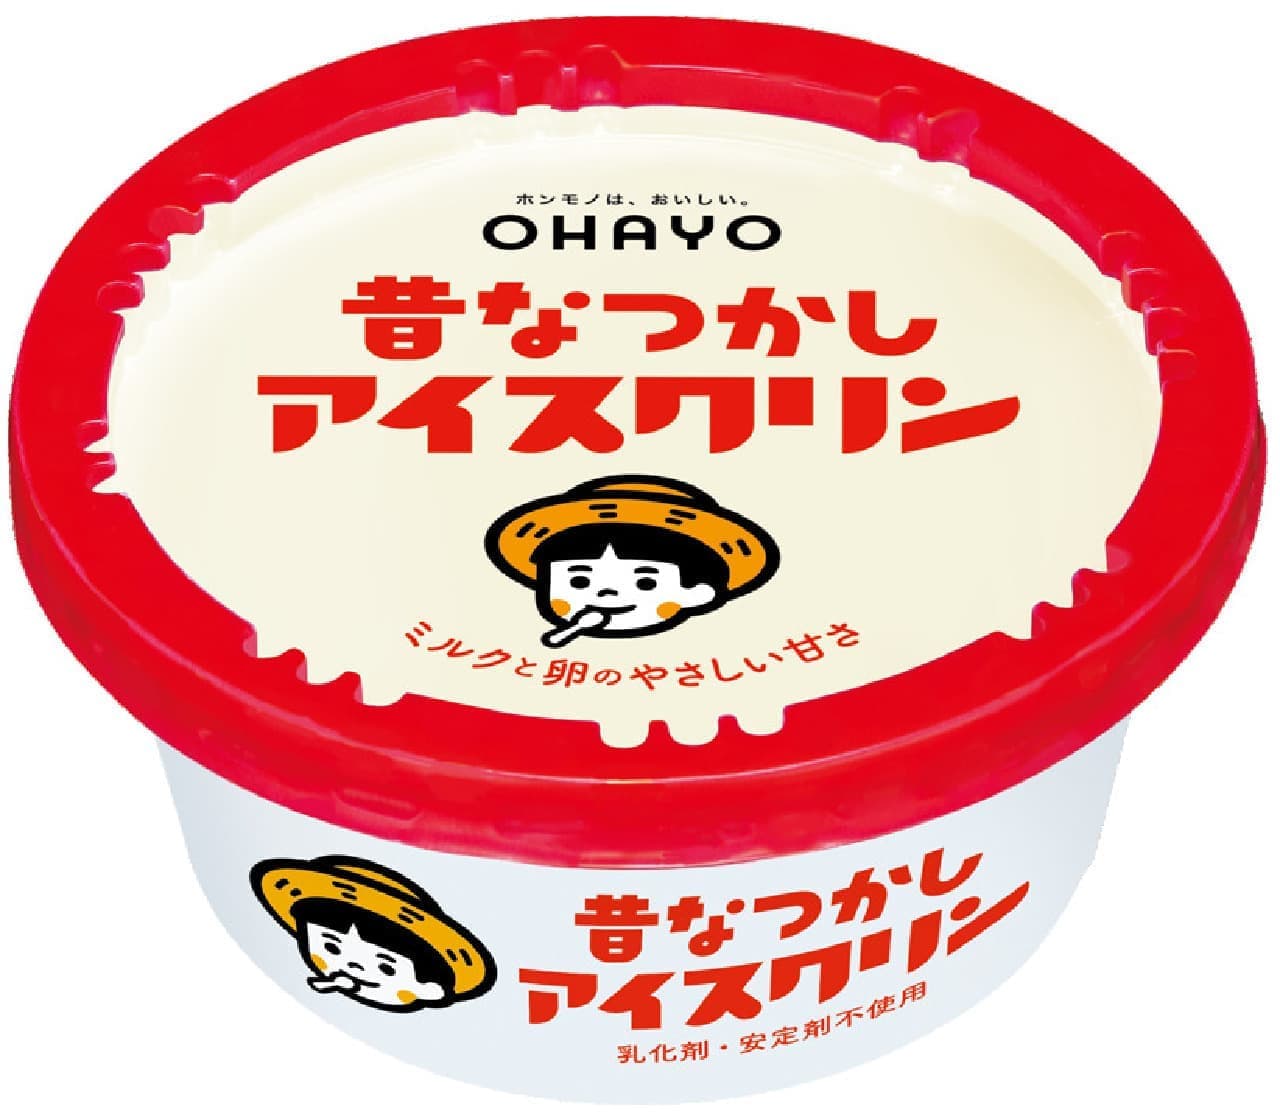 Ohayo Dairy "Old-Fashioned Ice Cranes